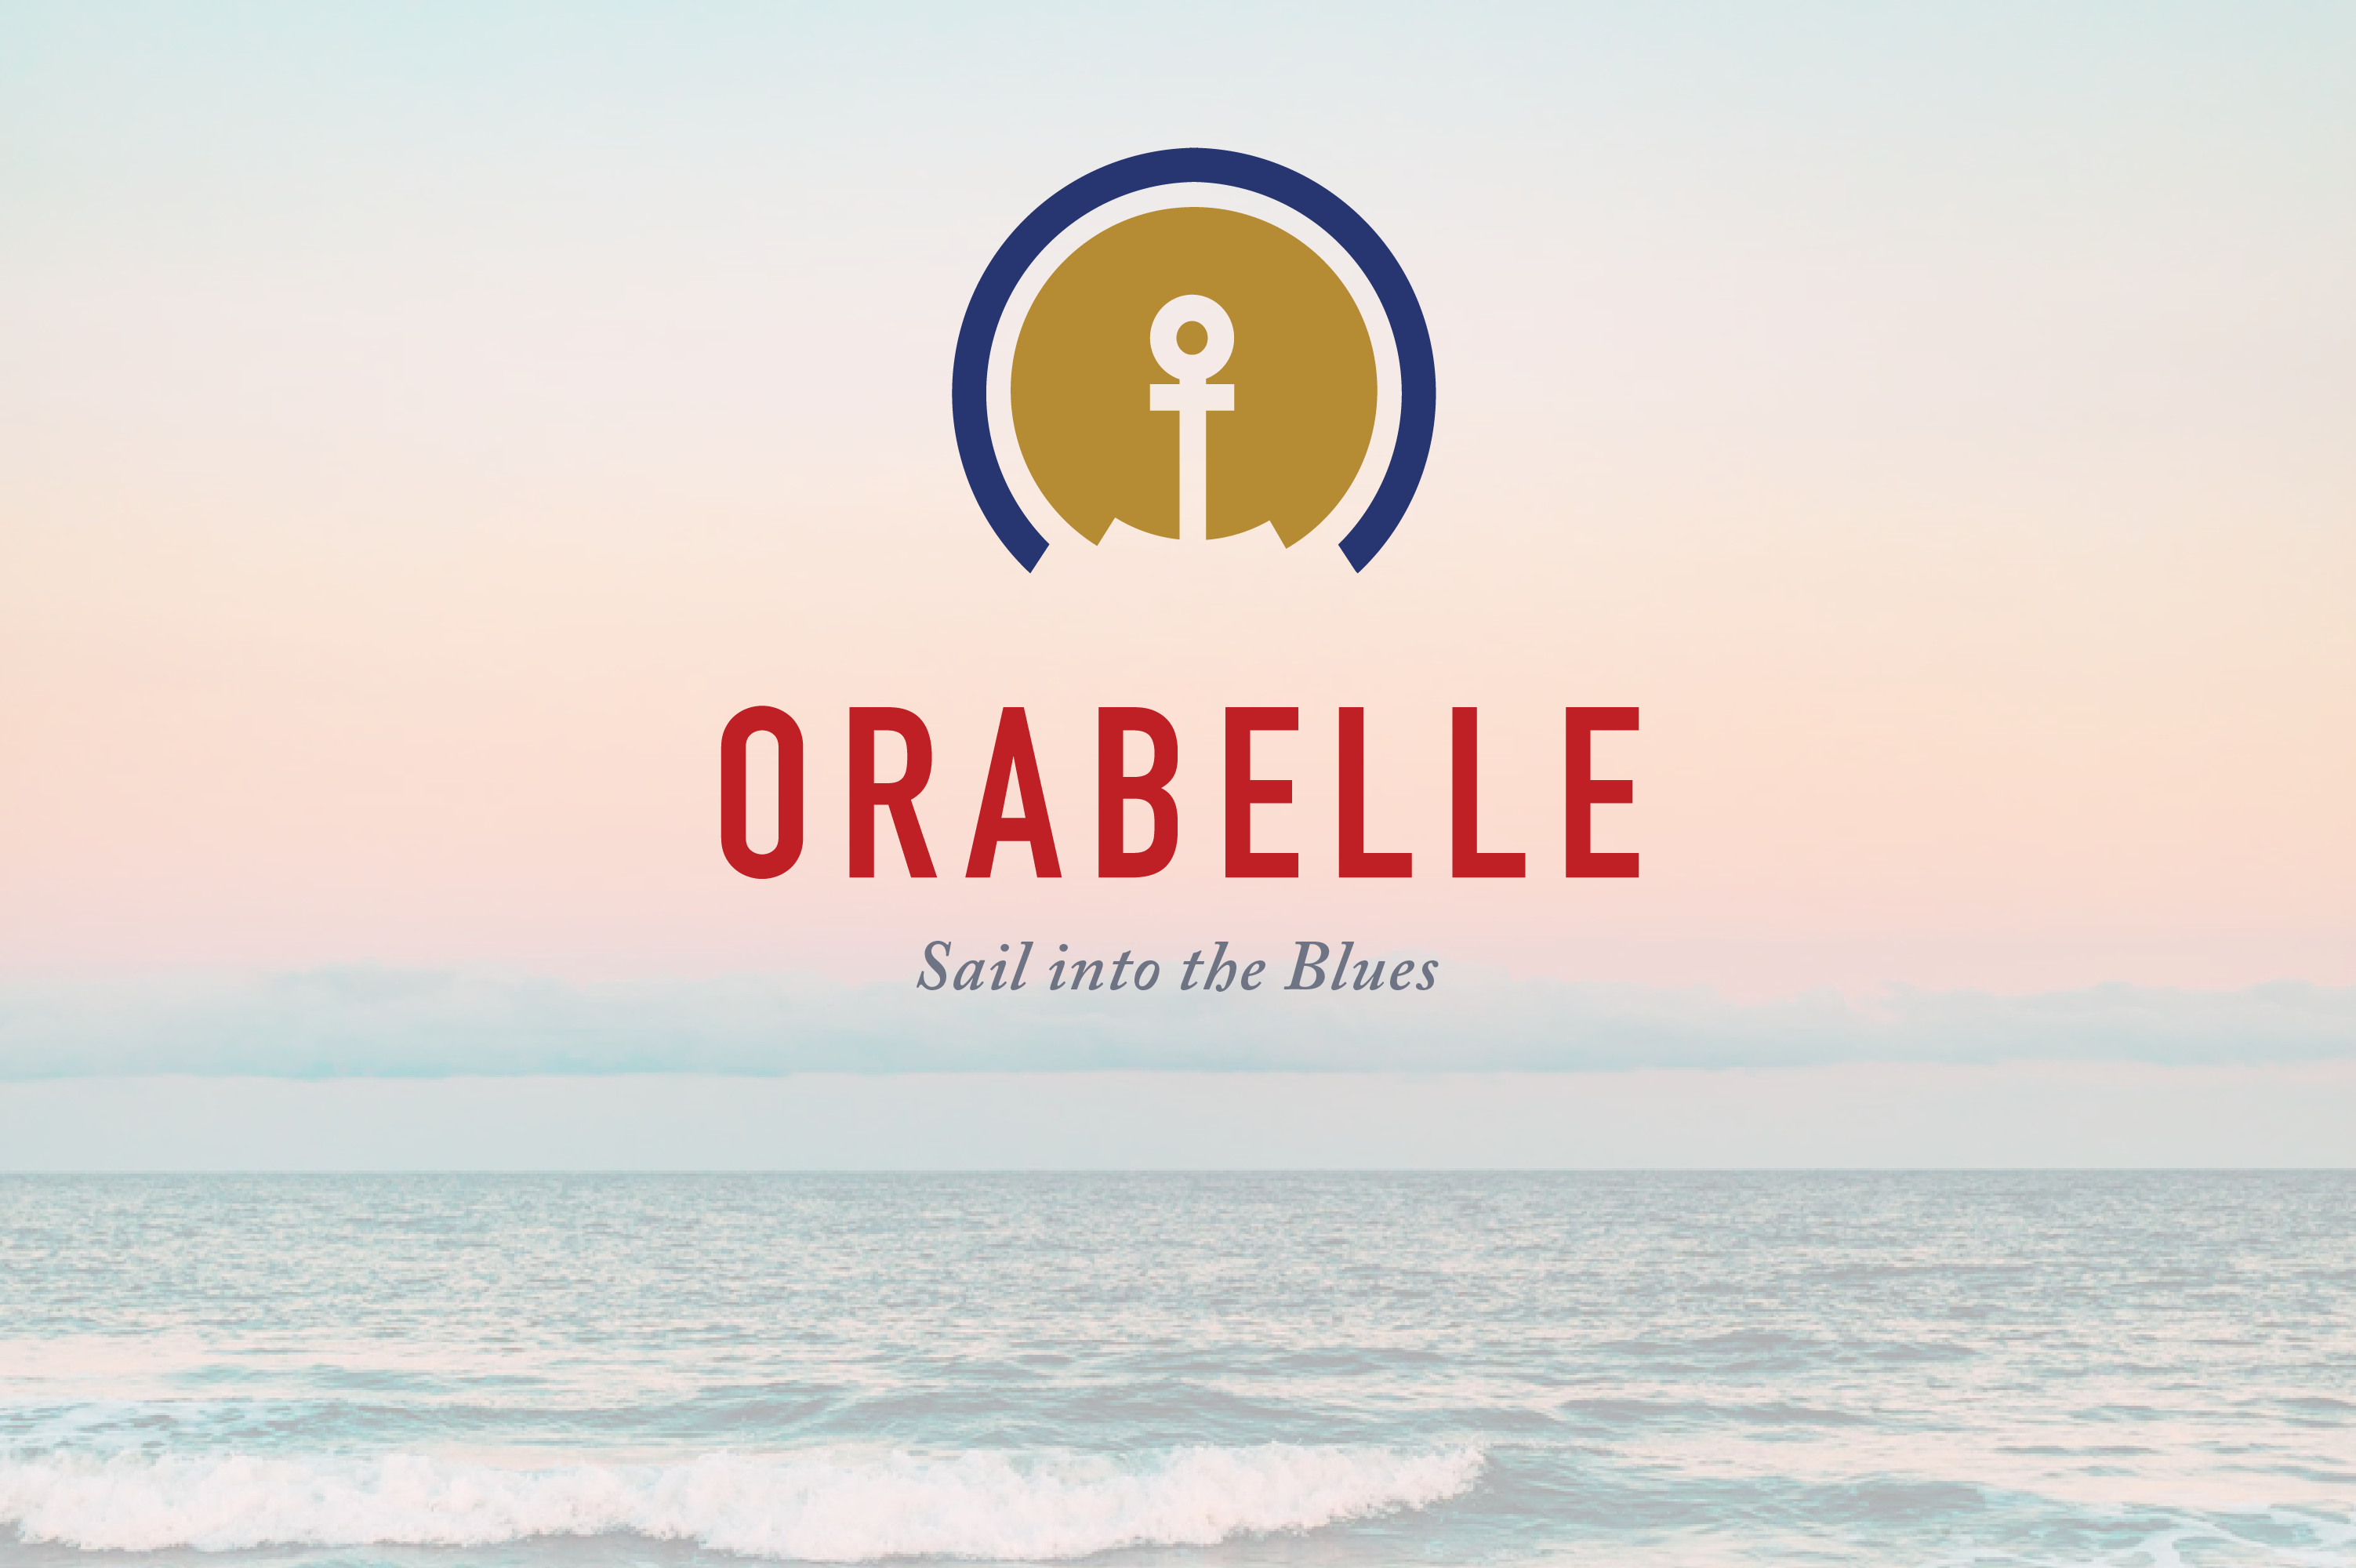 Orabelle Cruise